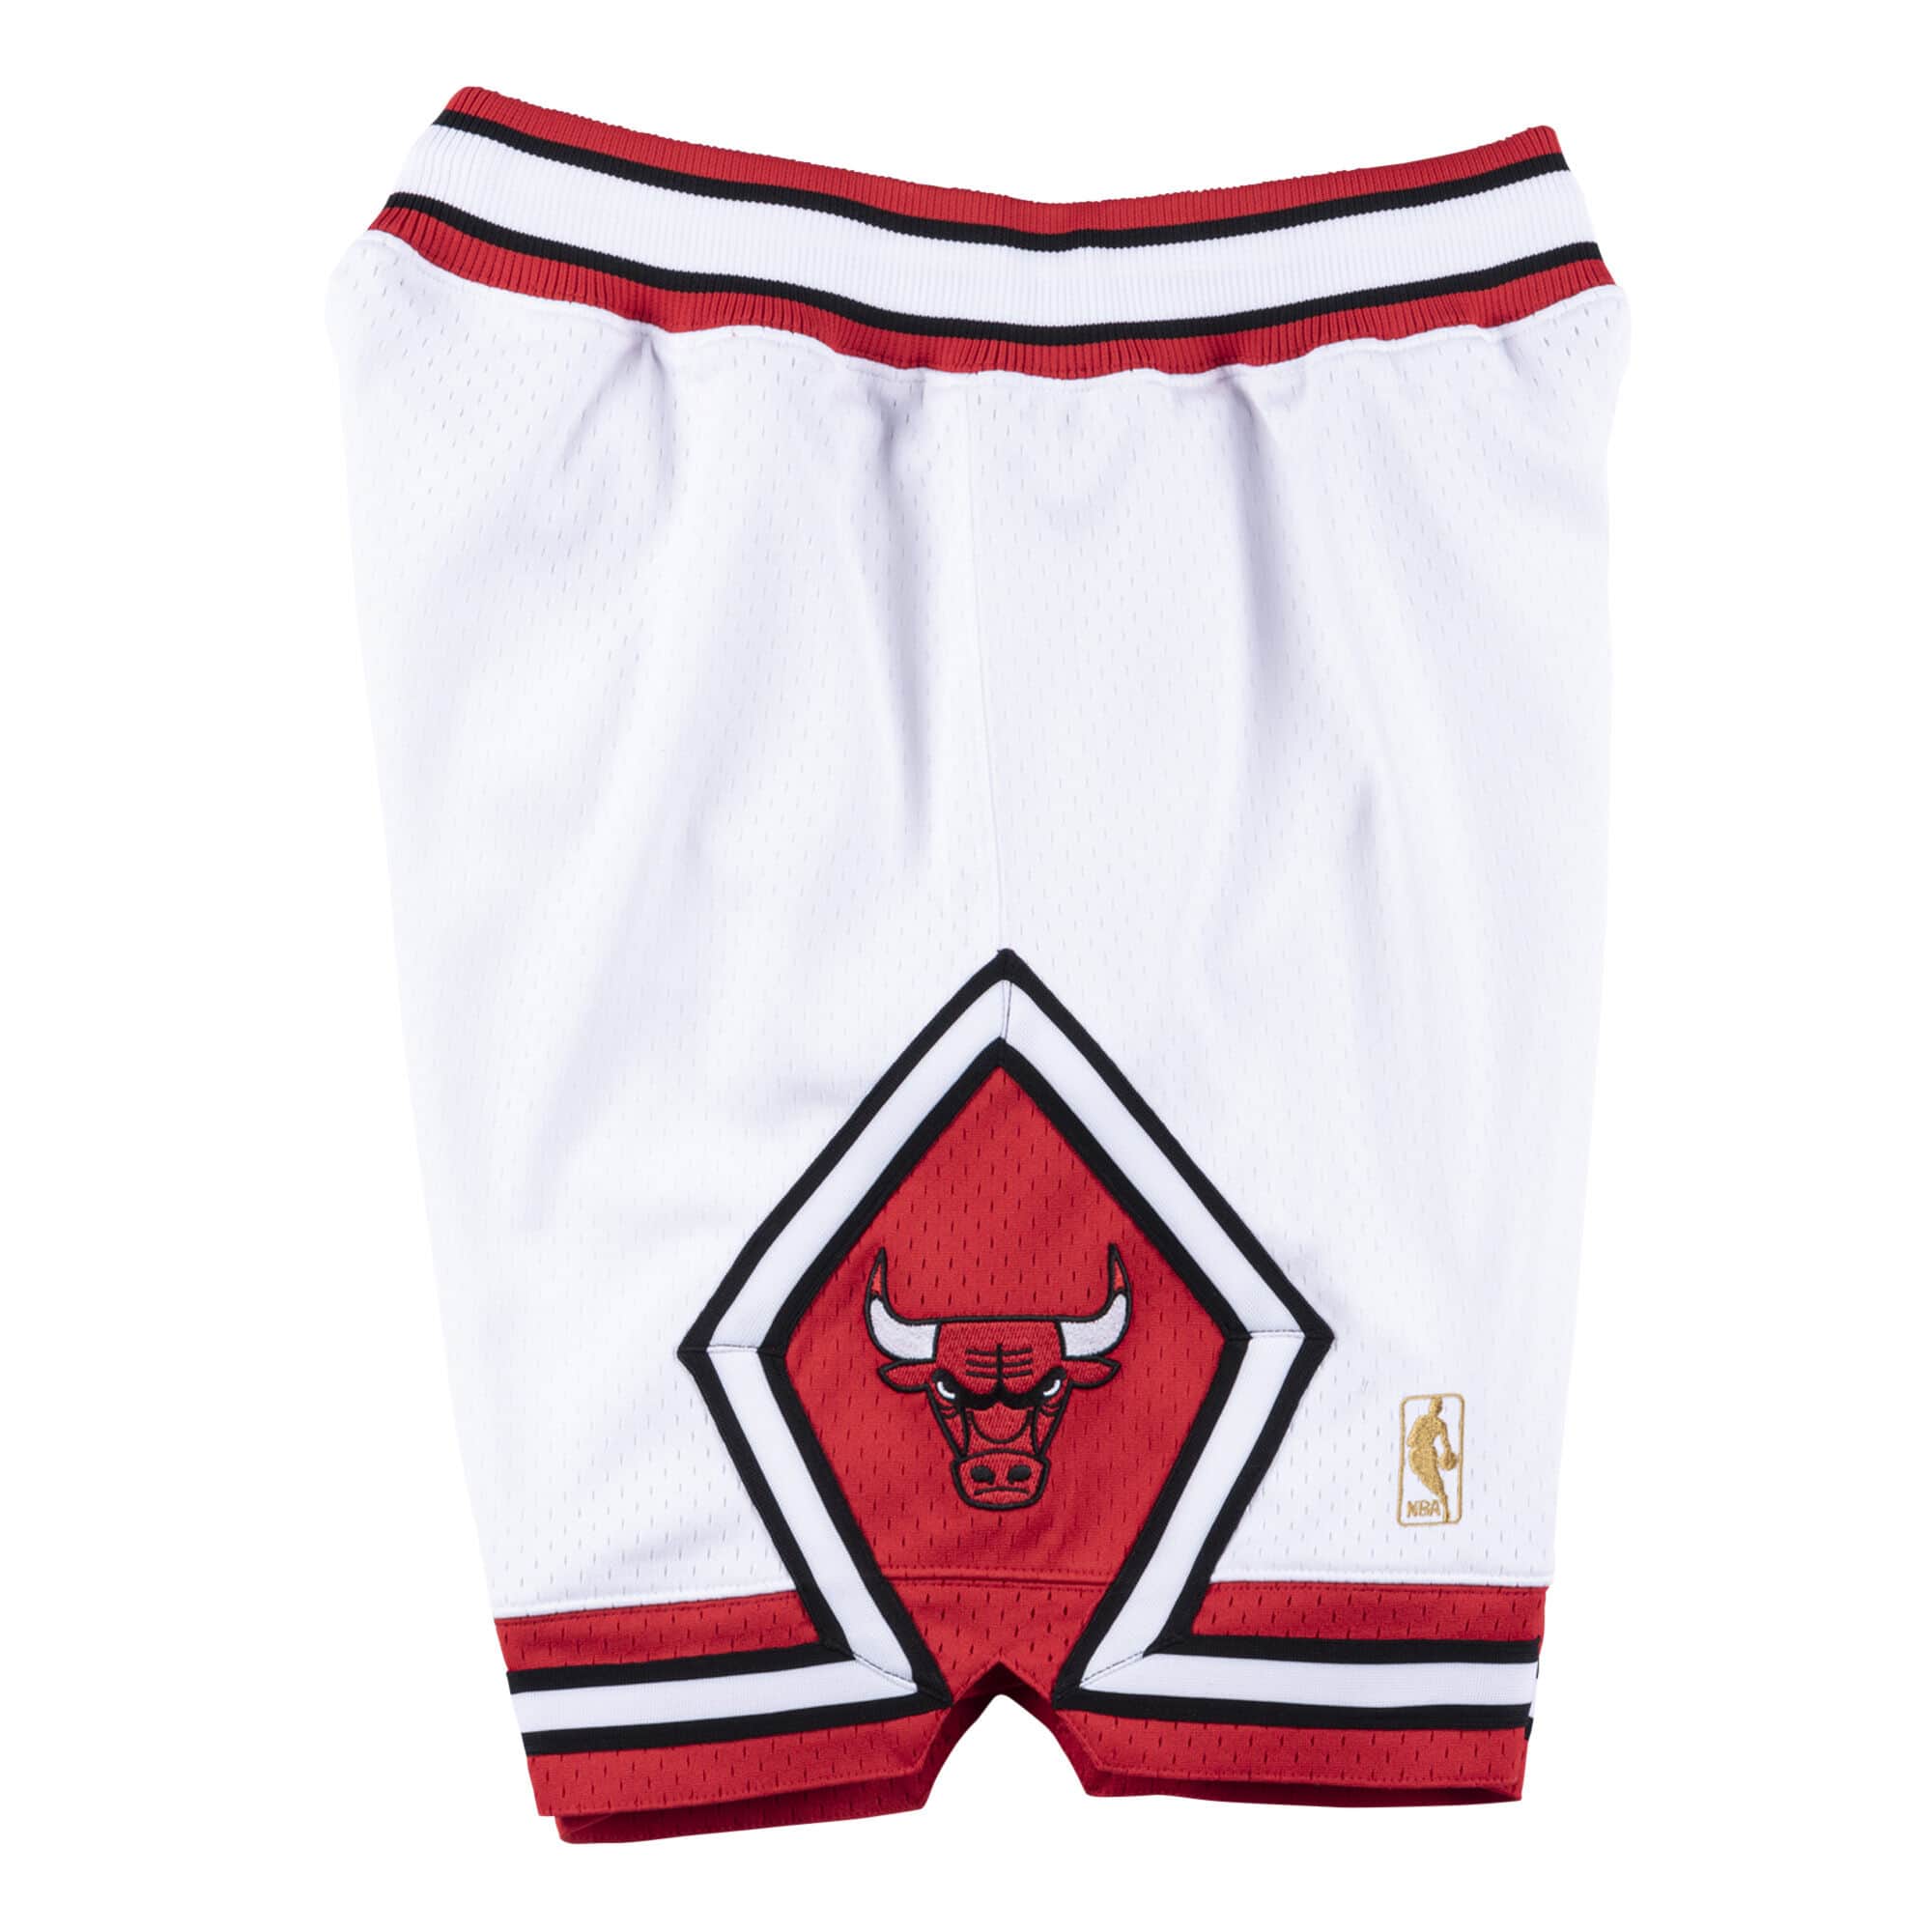 Authentic Mitchell & Ness White Chicago Bulls Road 1996-97 Shorts